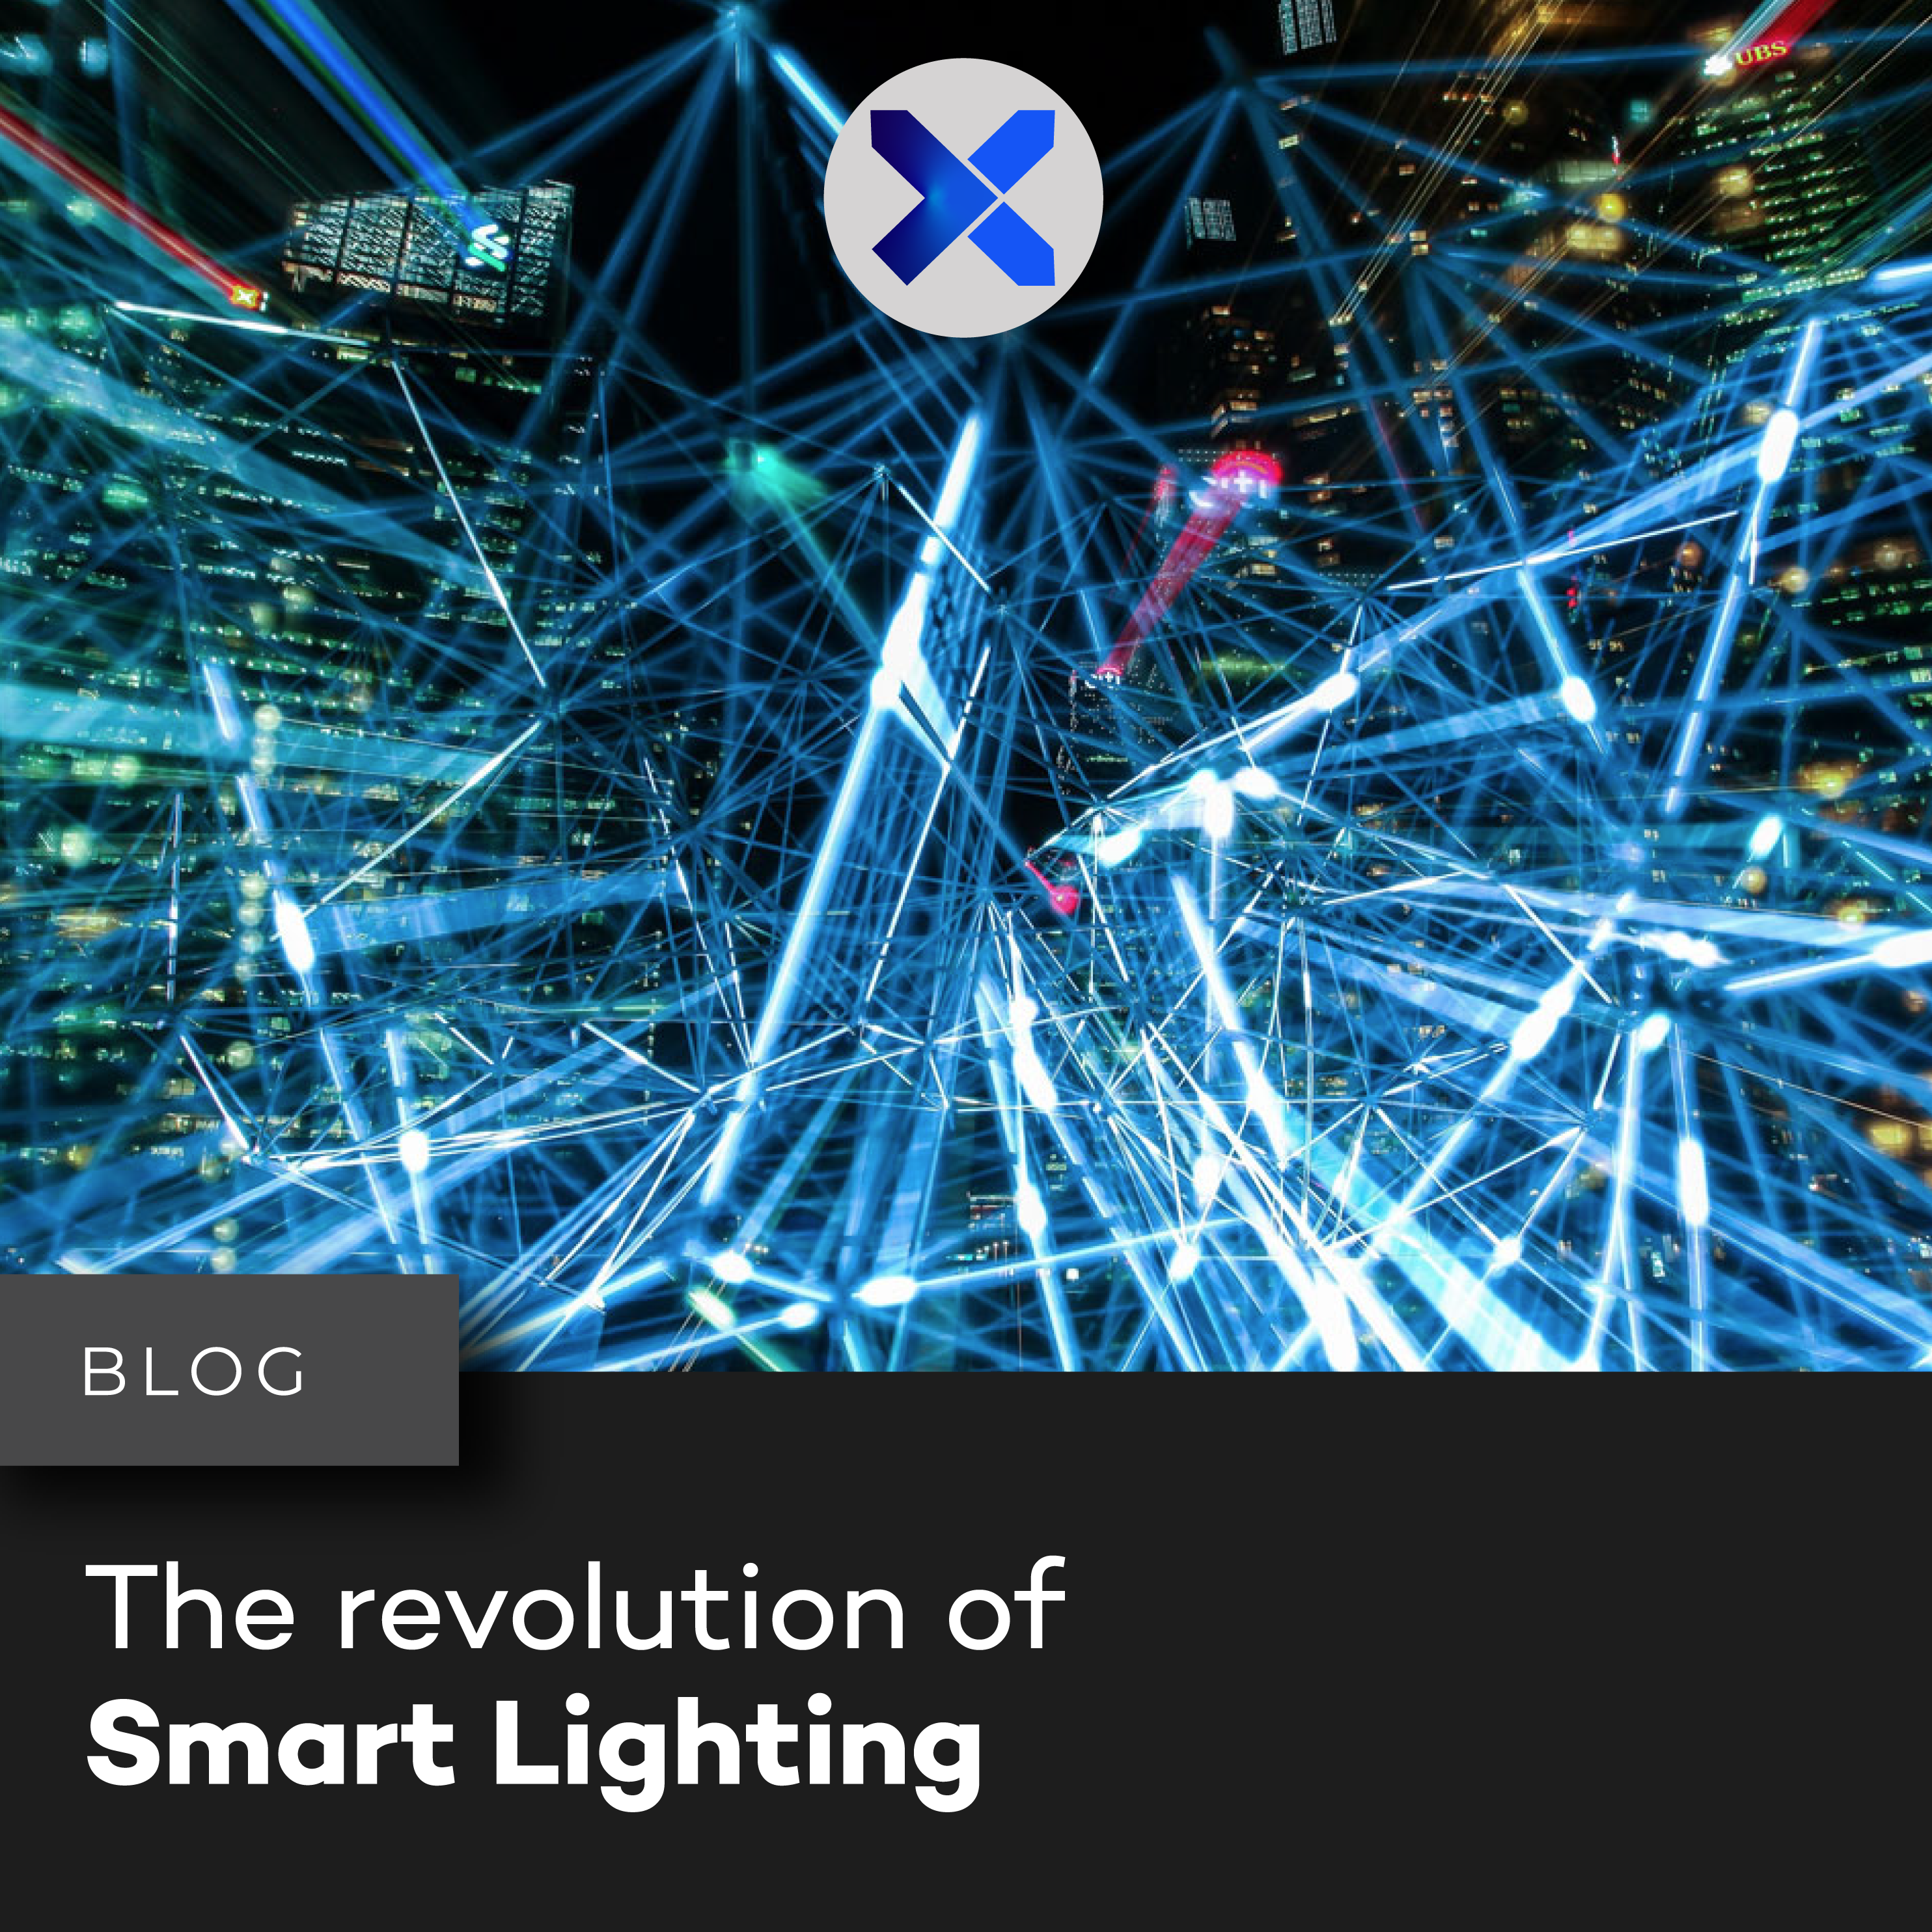 The revolution of Smart Lighting